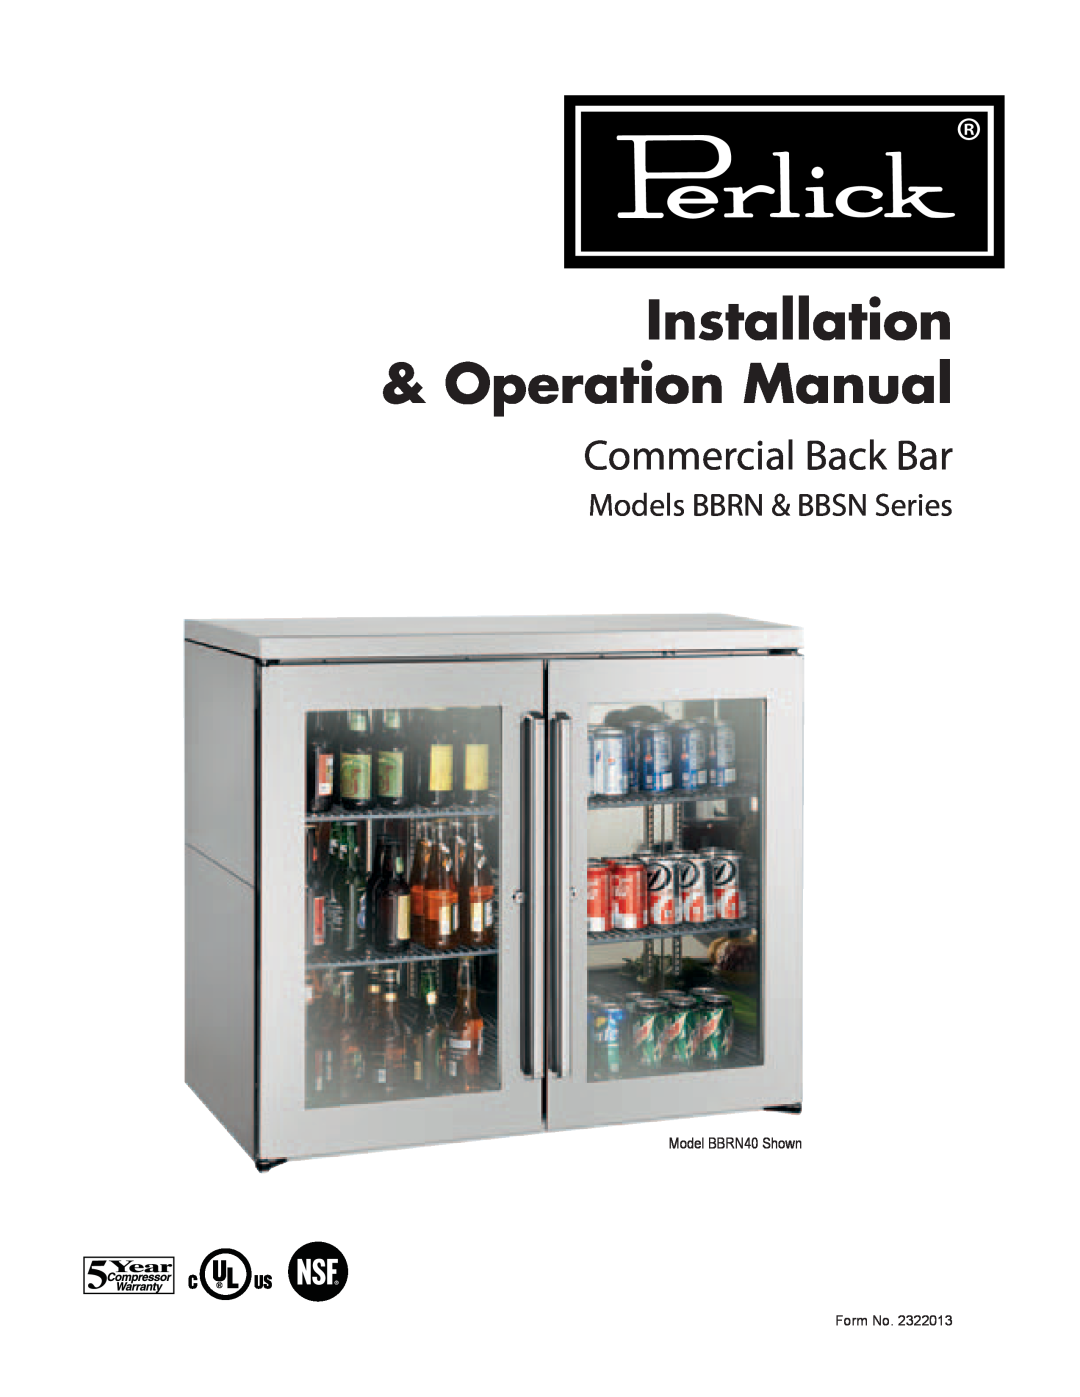 Perlick operation manual Commercial Back Bar, Models BBRN & BBSN Series, Form No 